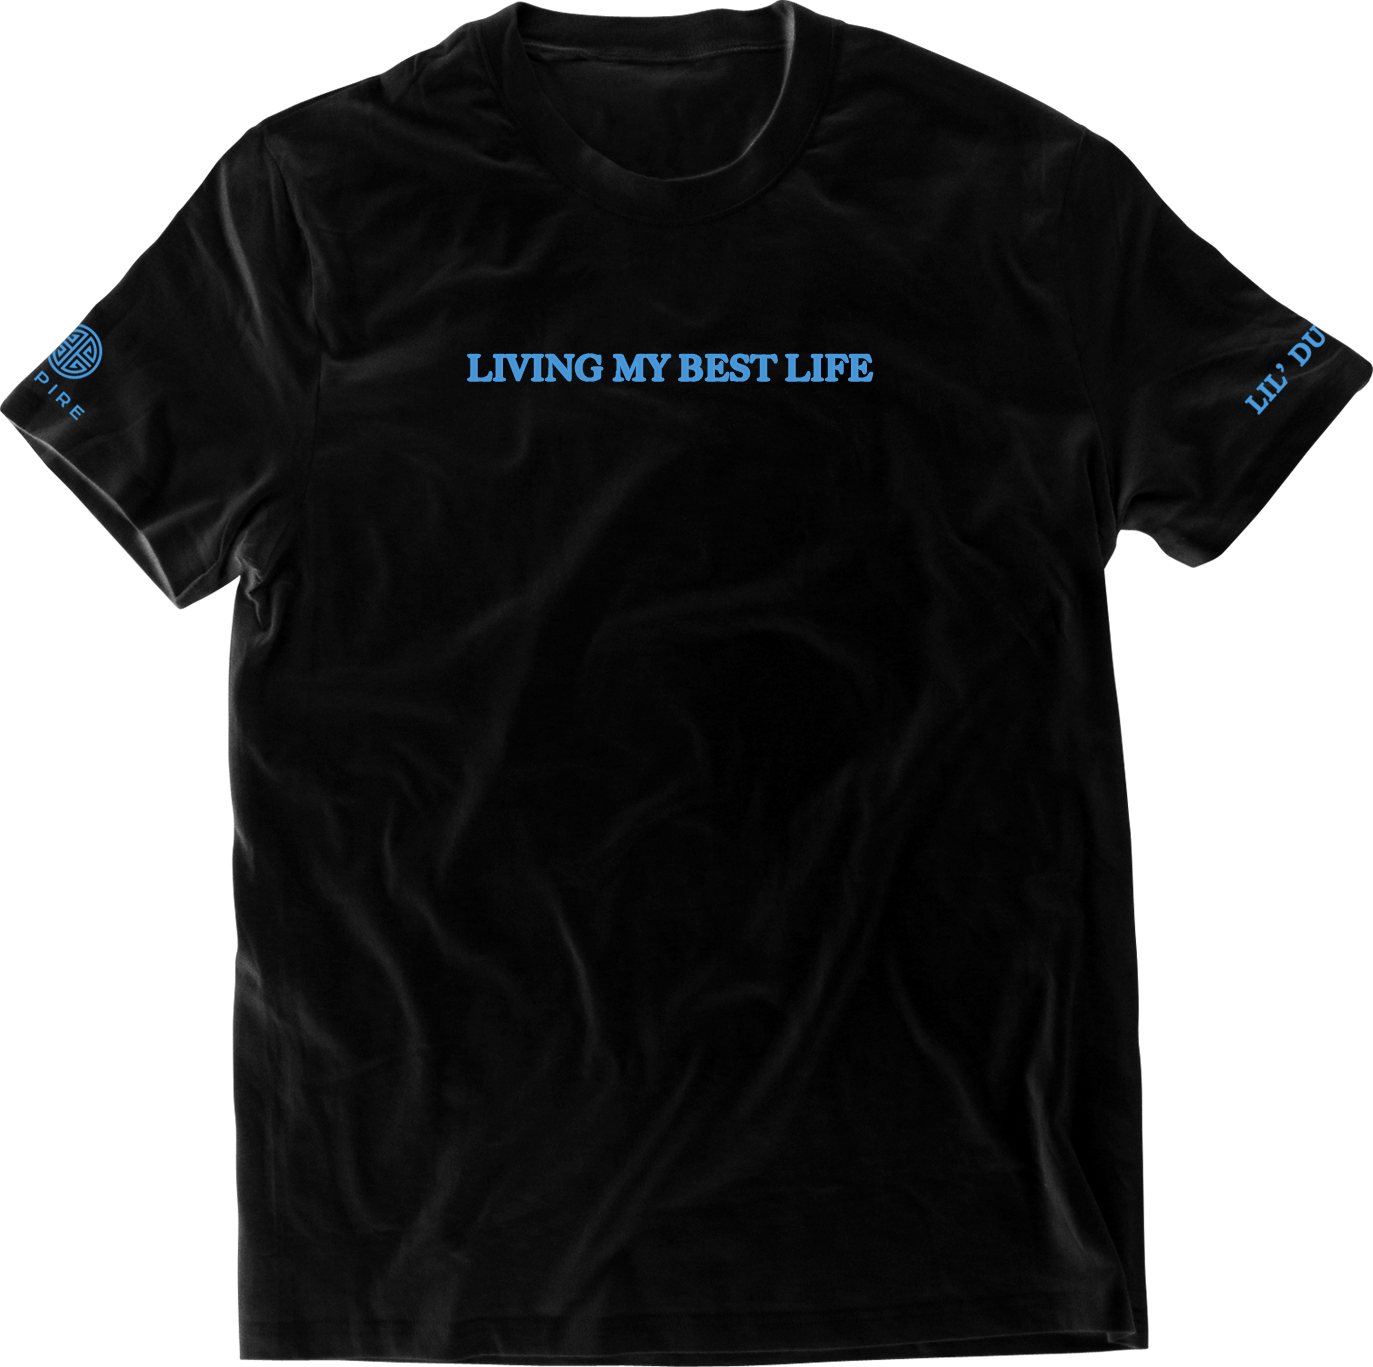 Lil Duval - Best Life T-Shirt (Black)